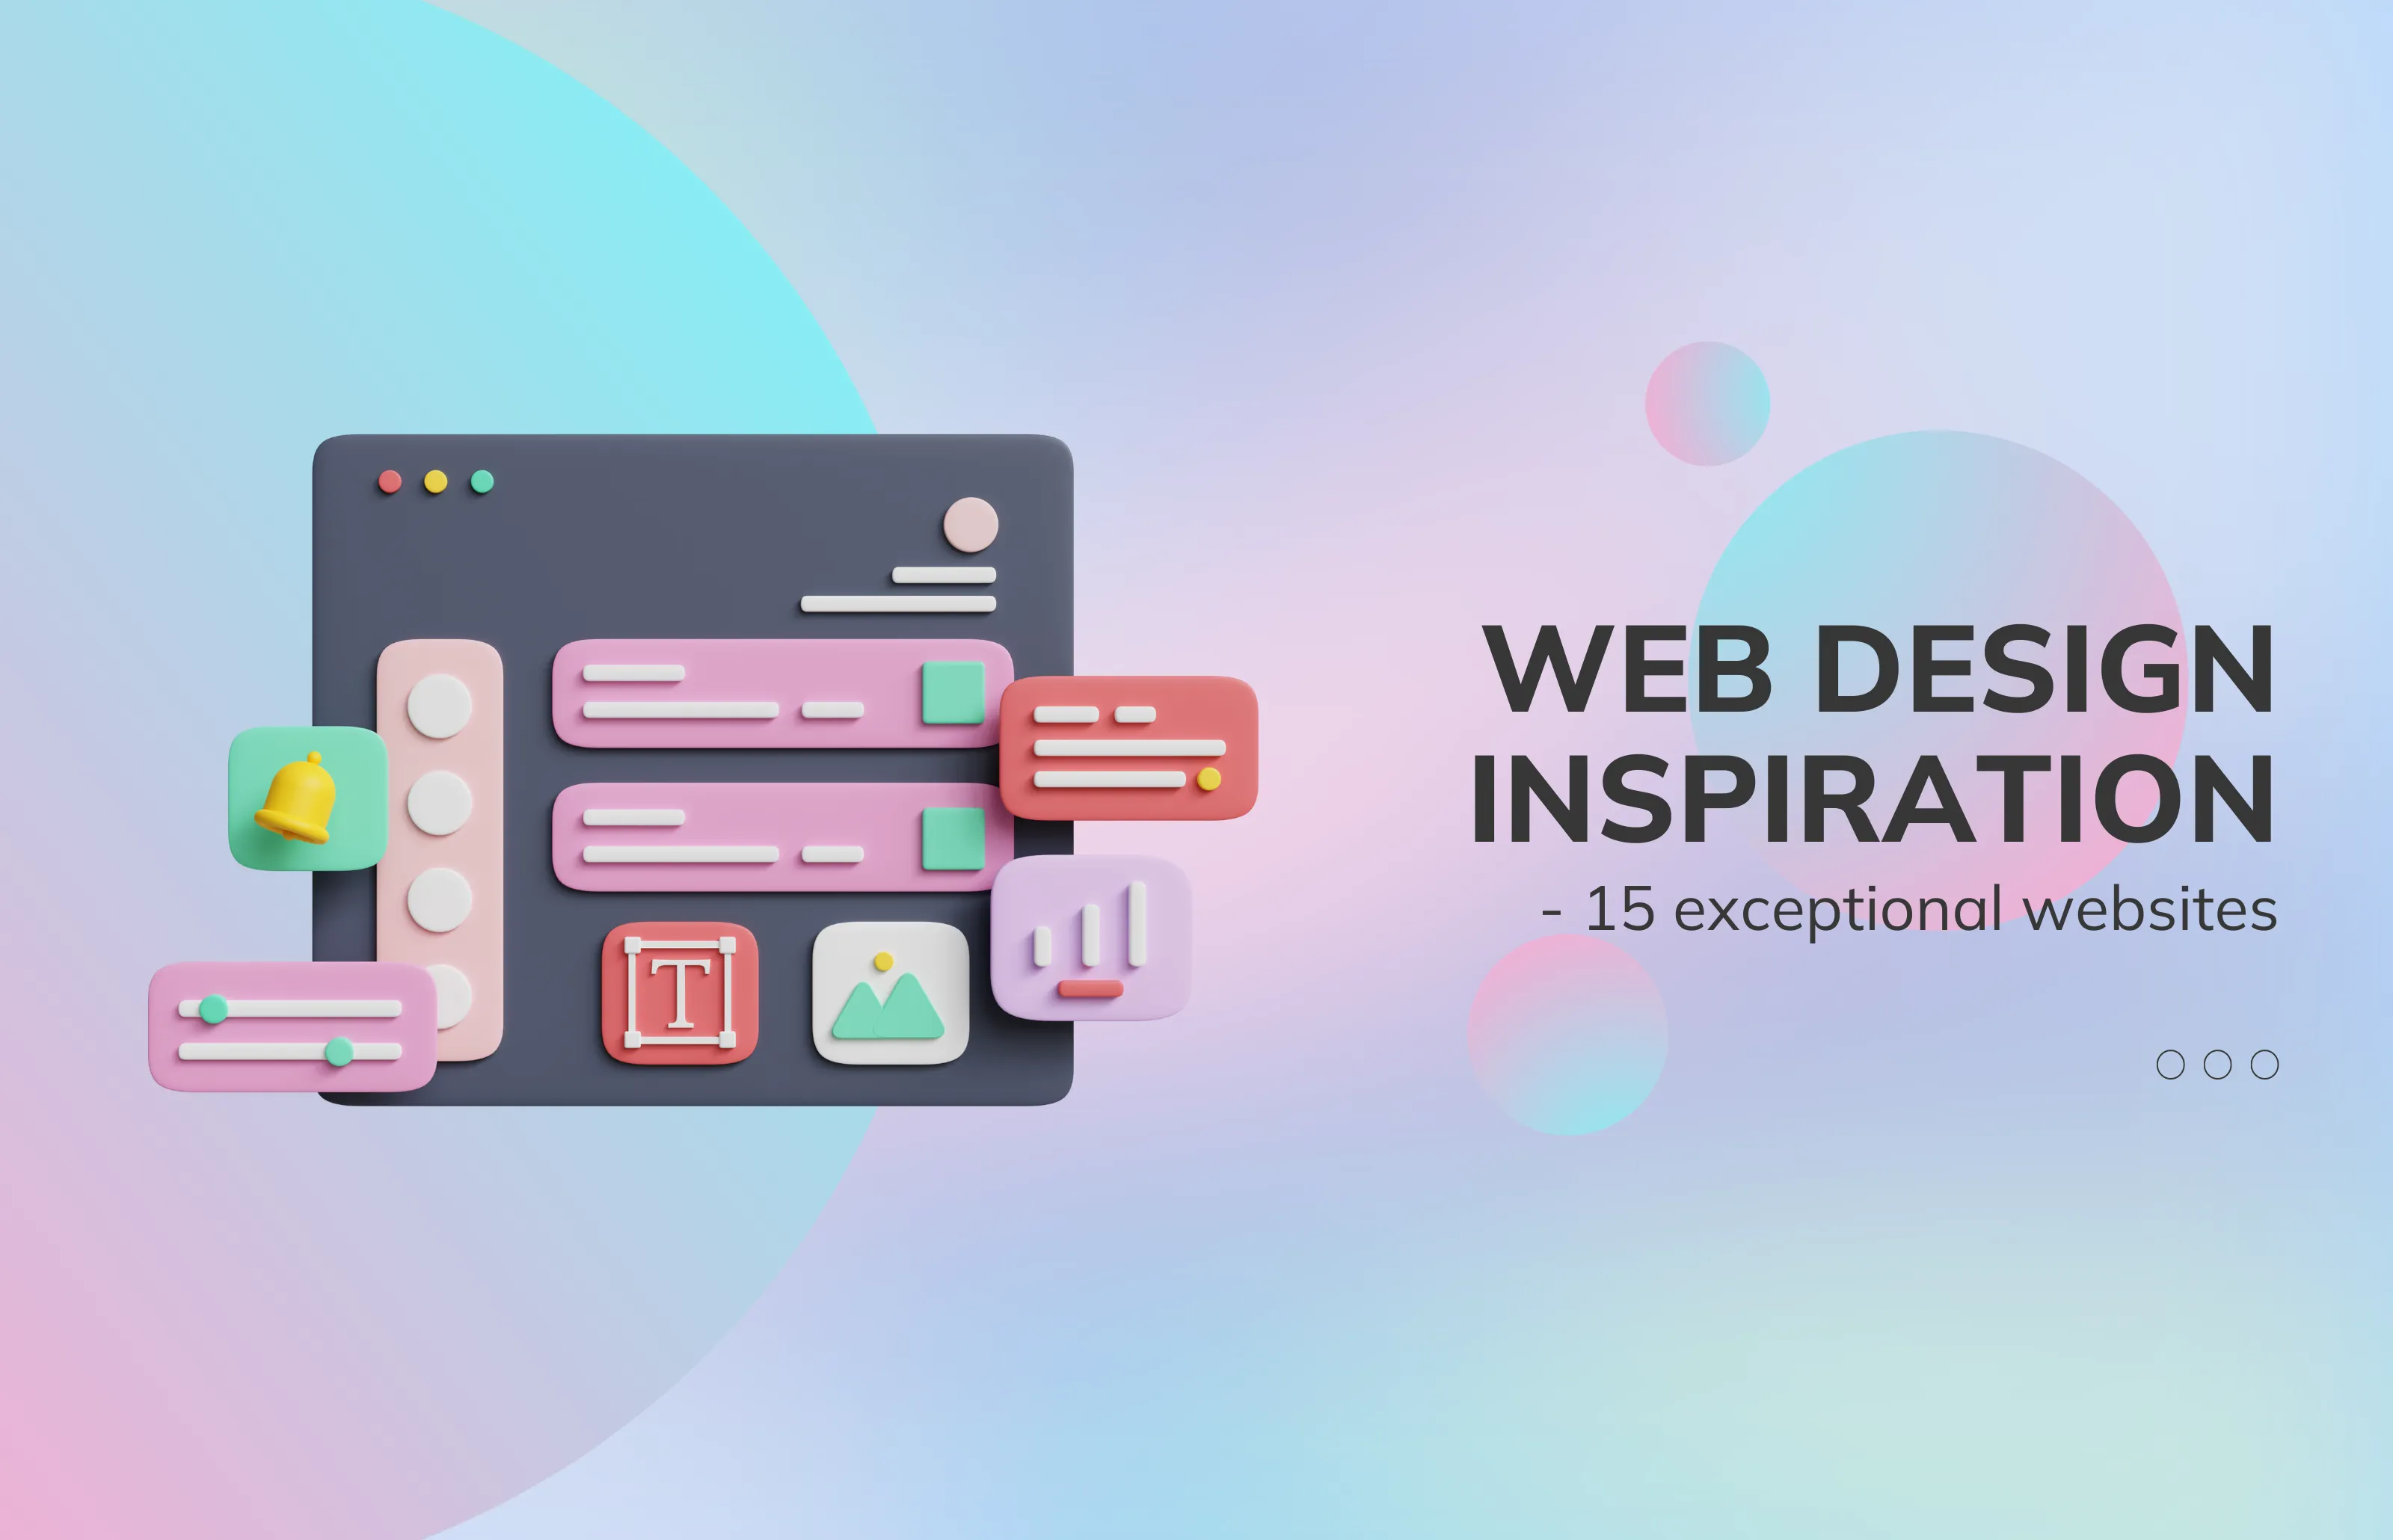 Web Design Inspiration: 15 Great Sites